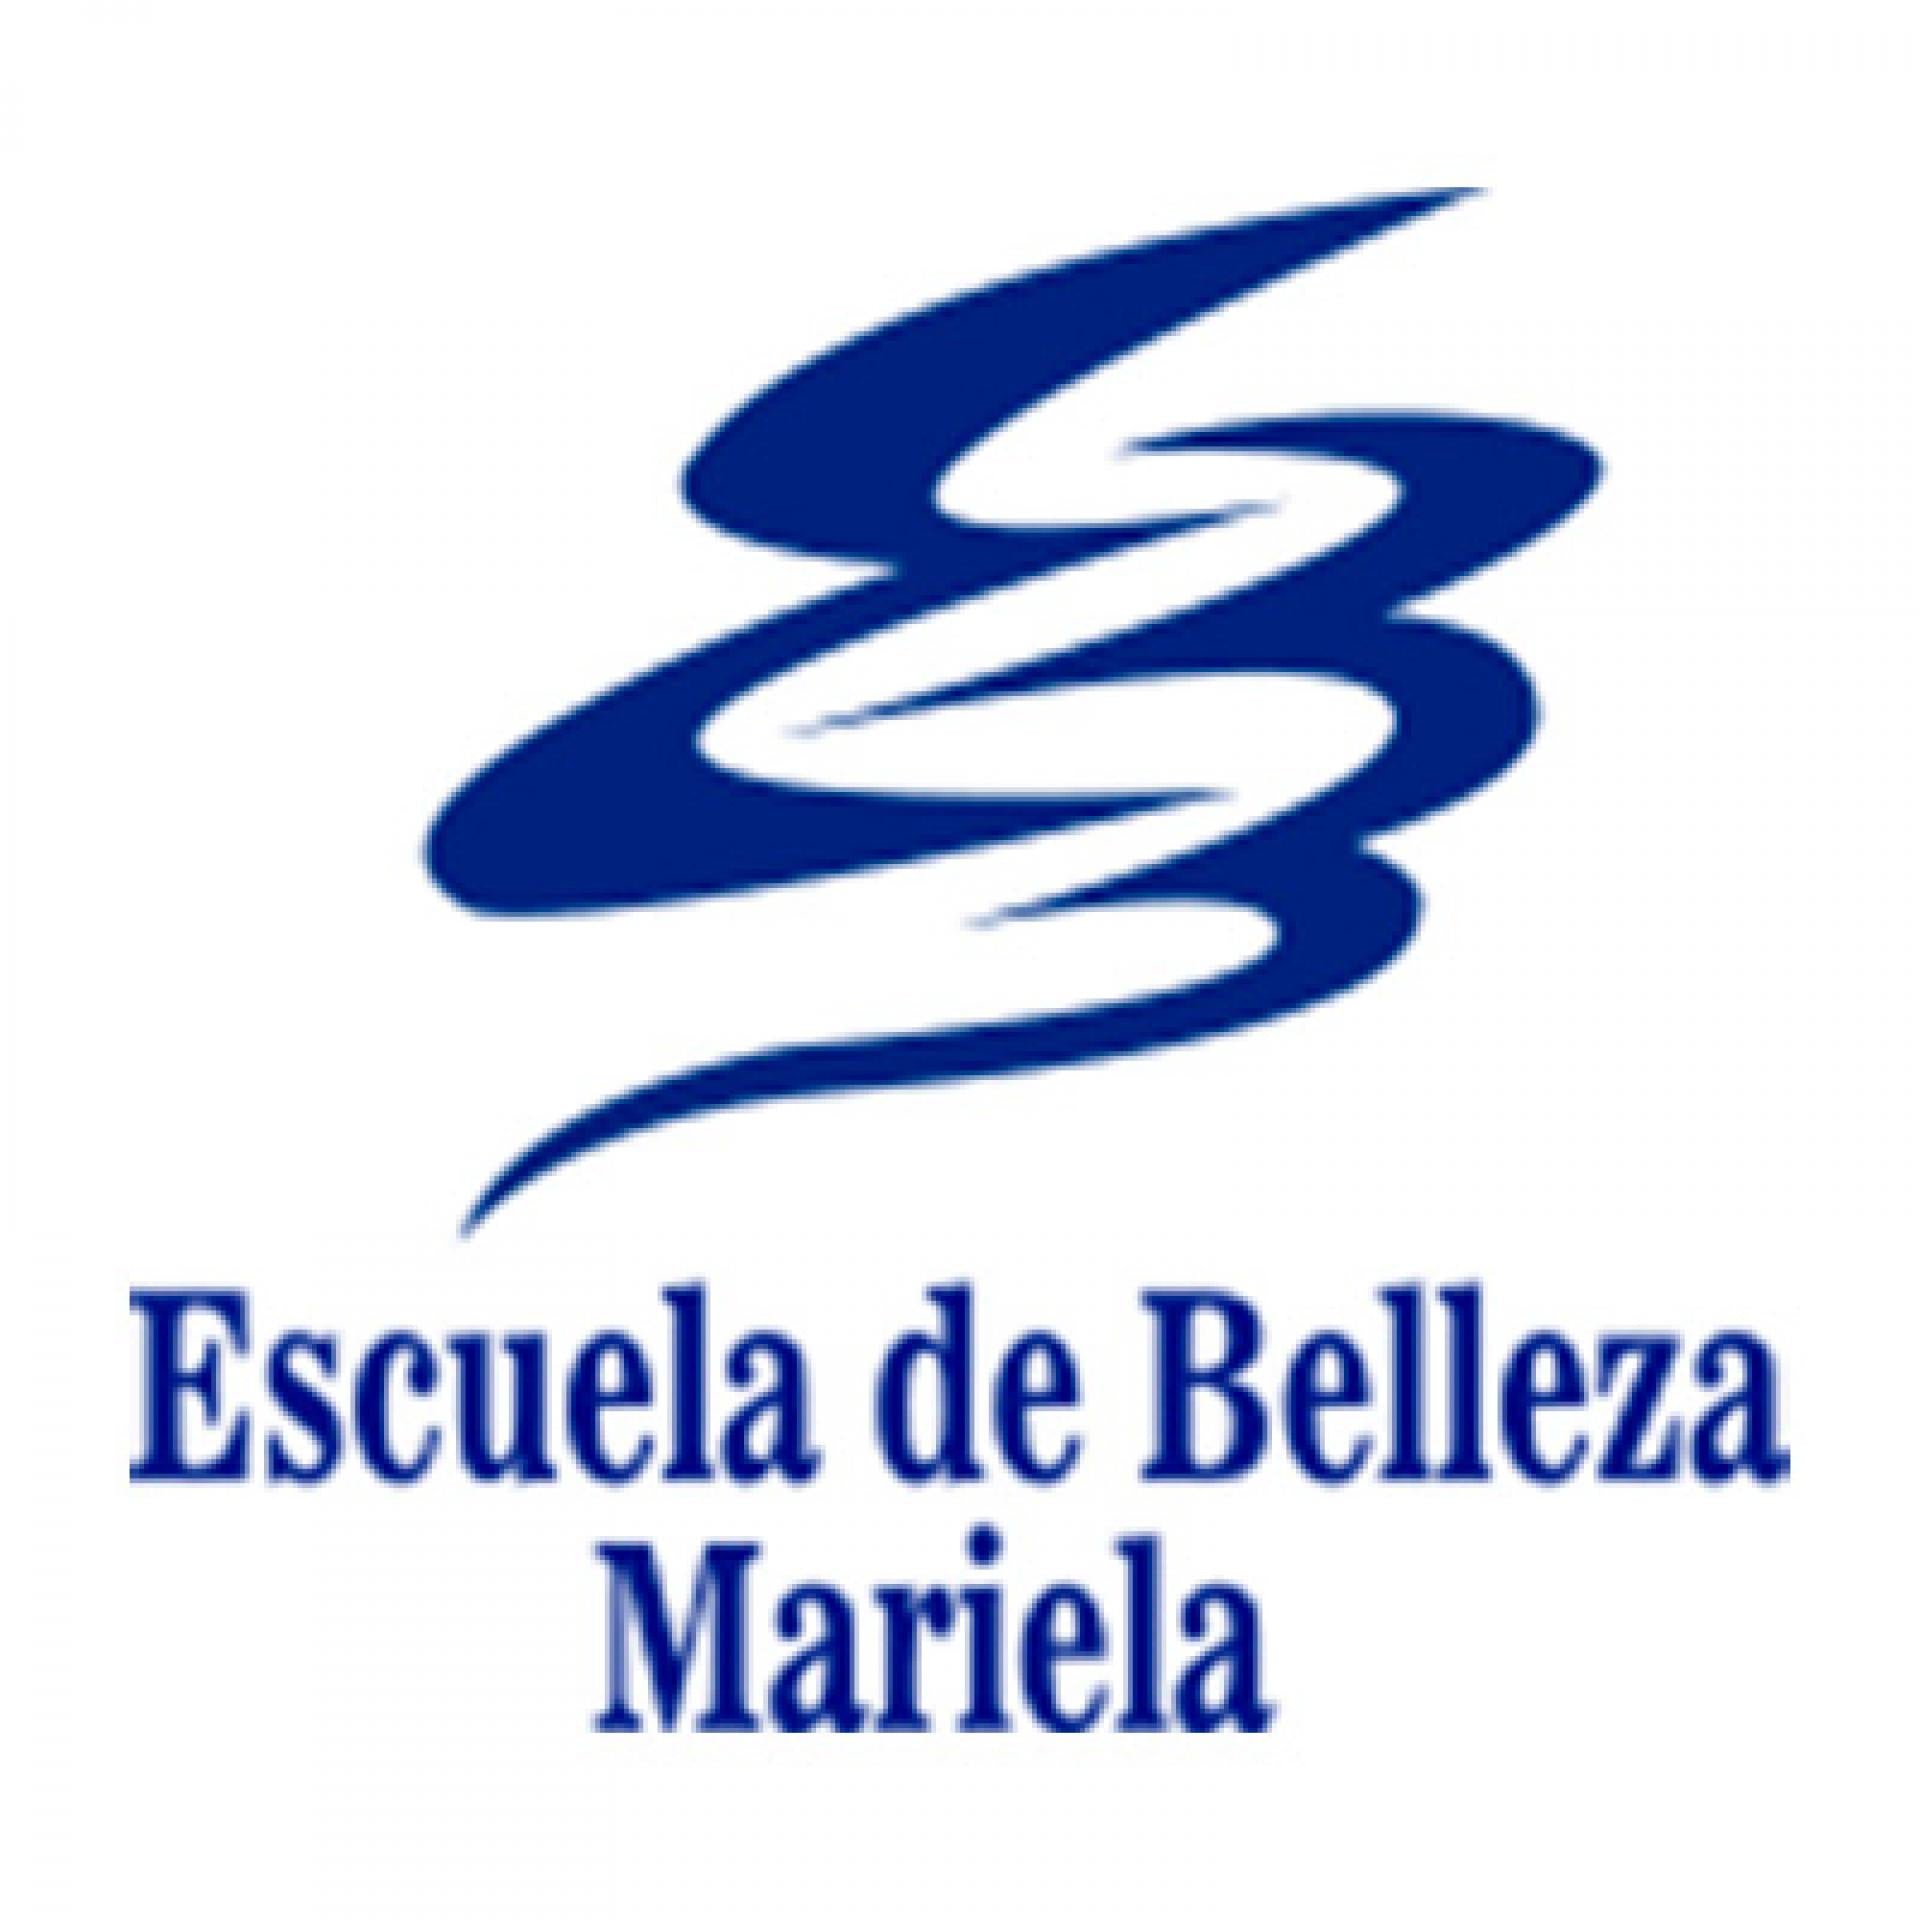 ESCUELA DE BELLEZA MARIELA